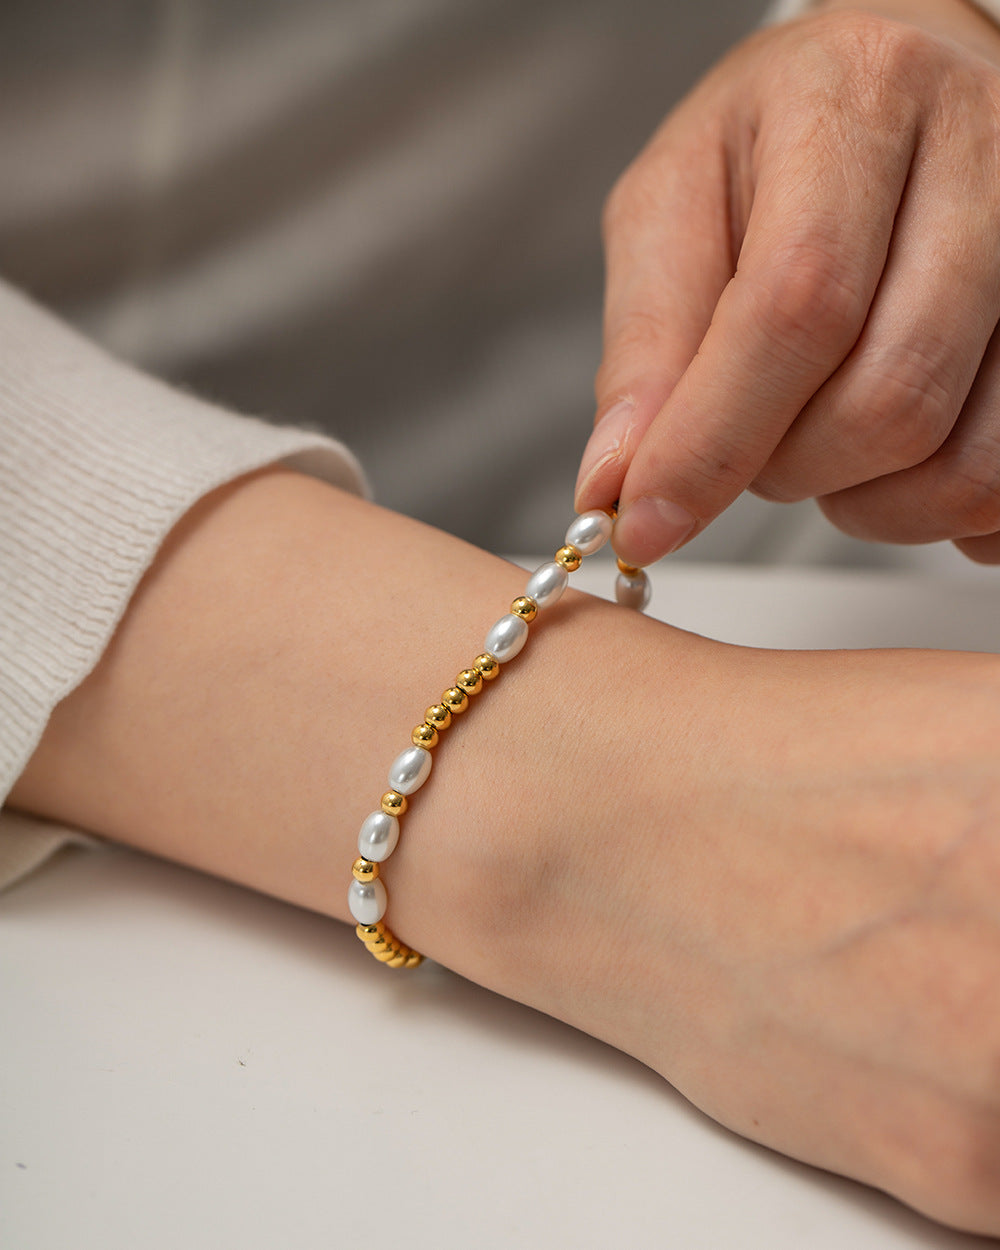 18K Gold Noble and Exquisite Pearl Versatile Bracelet - SAOROPHO